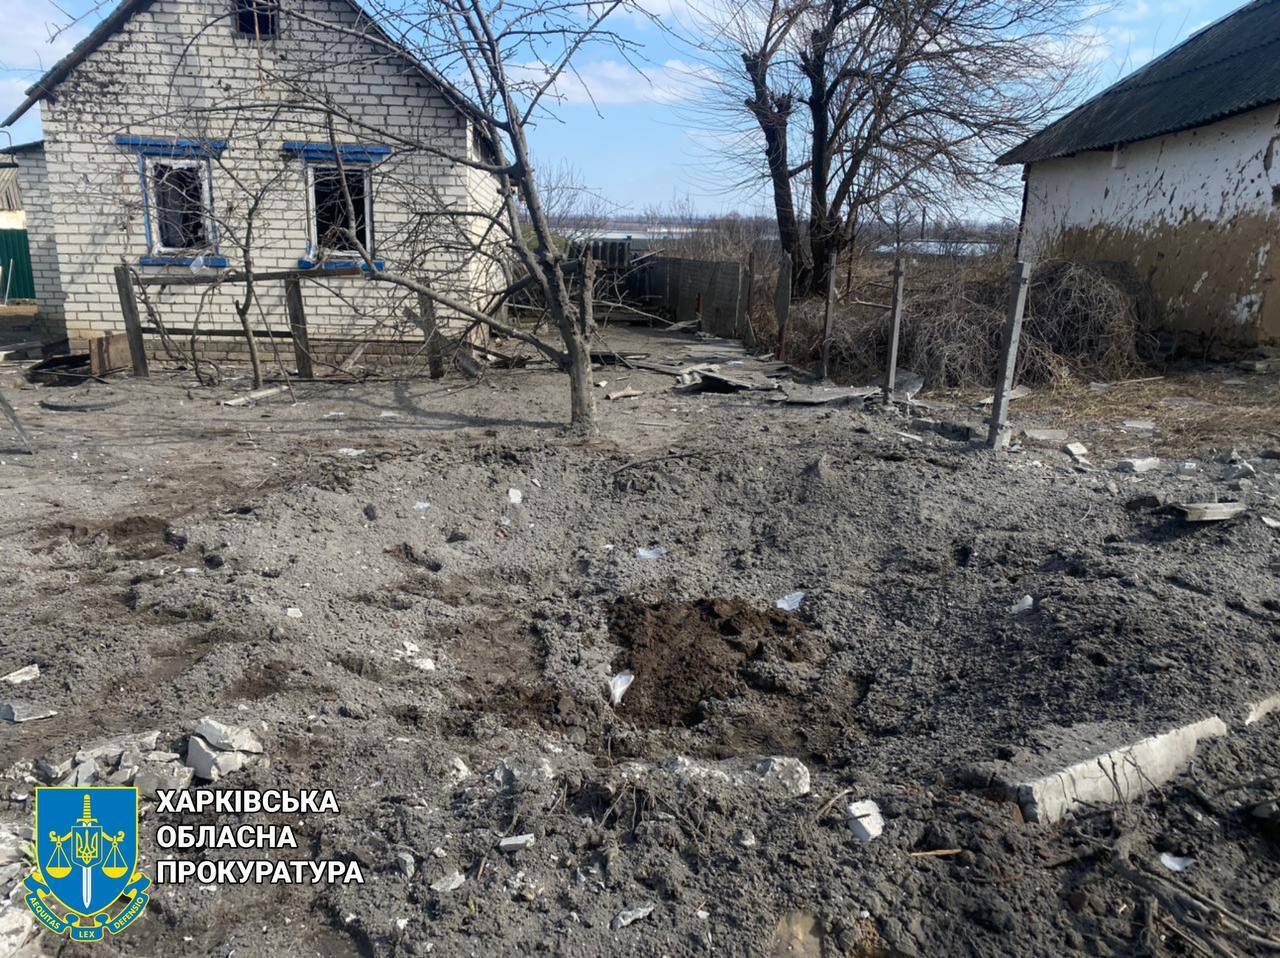 Оккупанты обстреляли село на Харьковщине: погиб мужчина. Фото